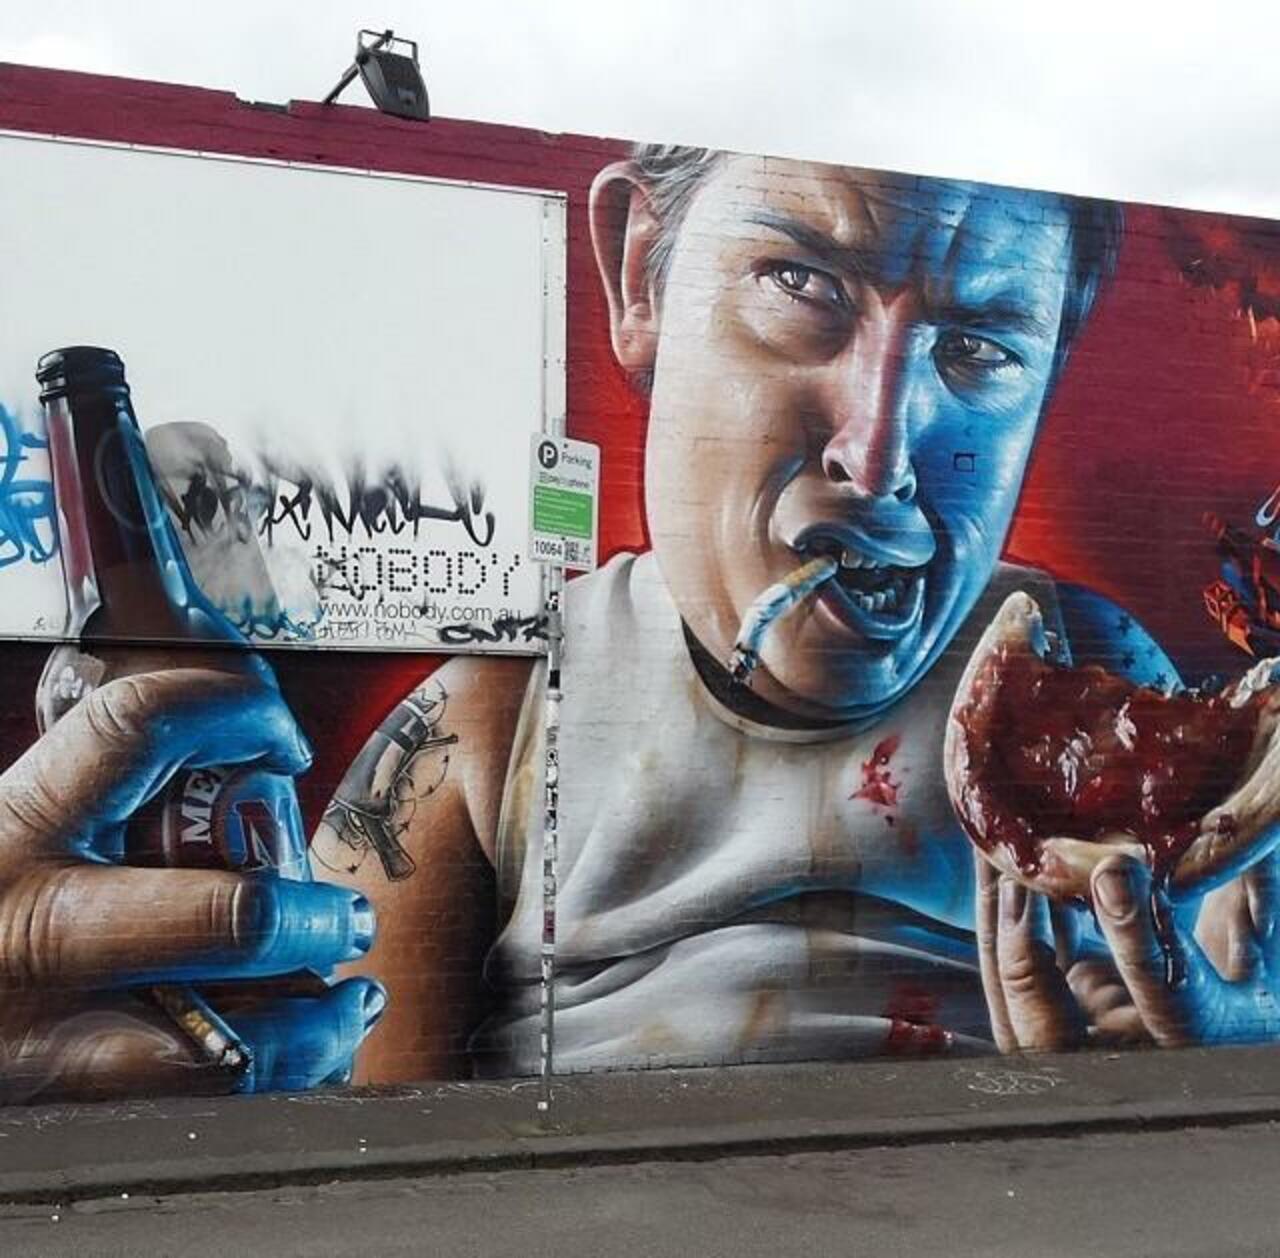 Hyperrealistic Street Art colab located in Melbourne
#art #mural #graffiti #streetart http://t.co/39cqfSuySq”